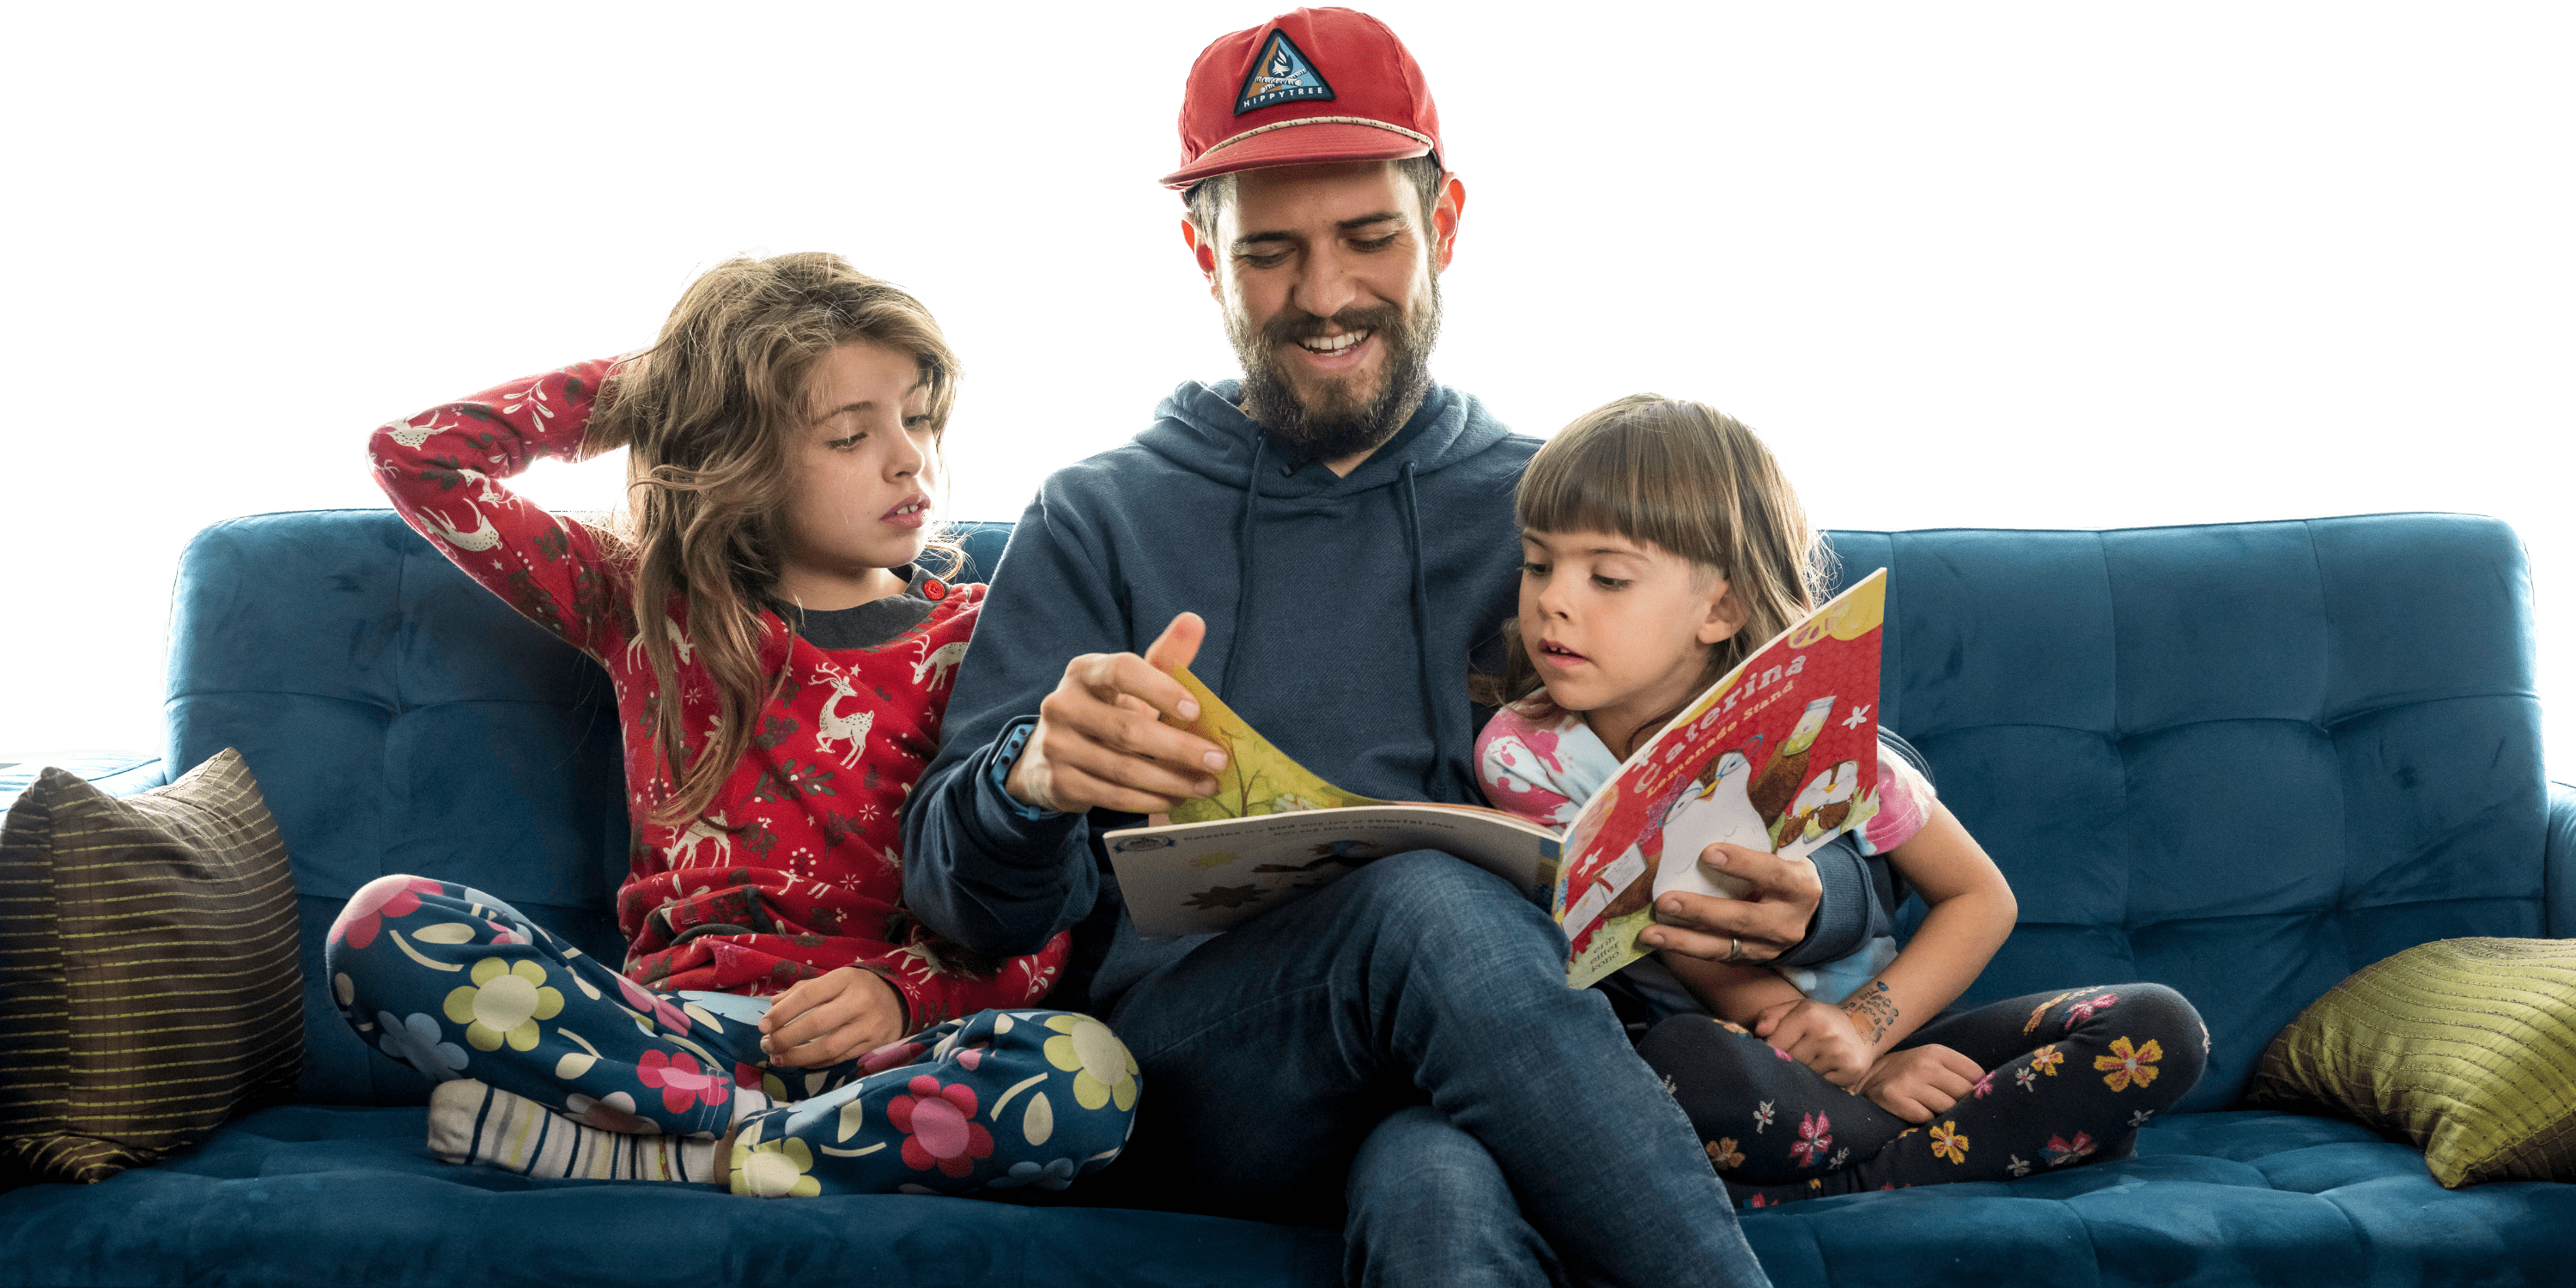 An image of a family enjoying a book